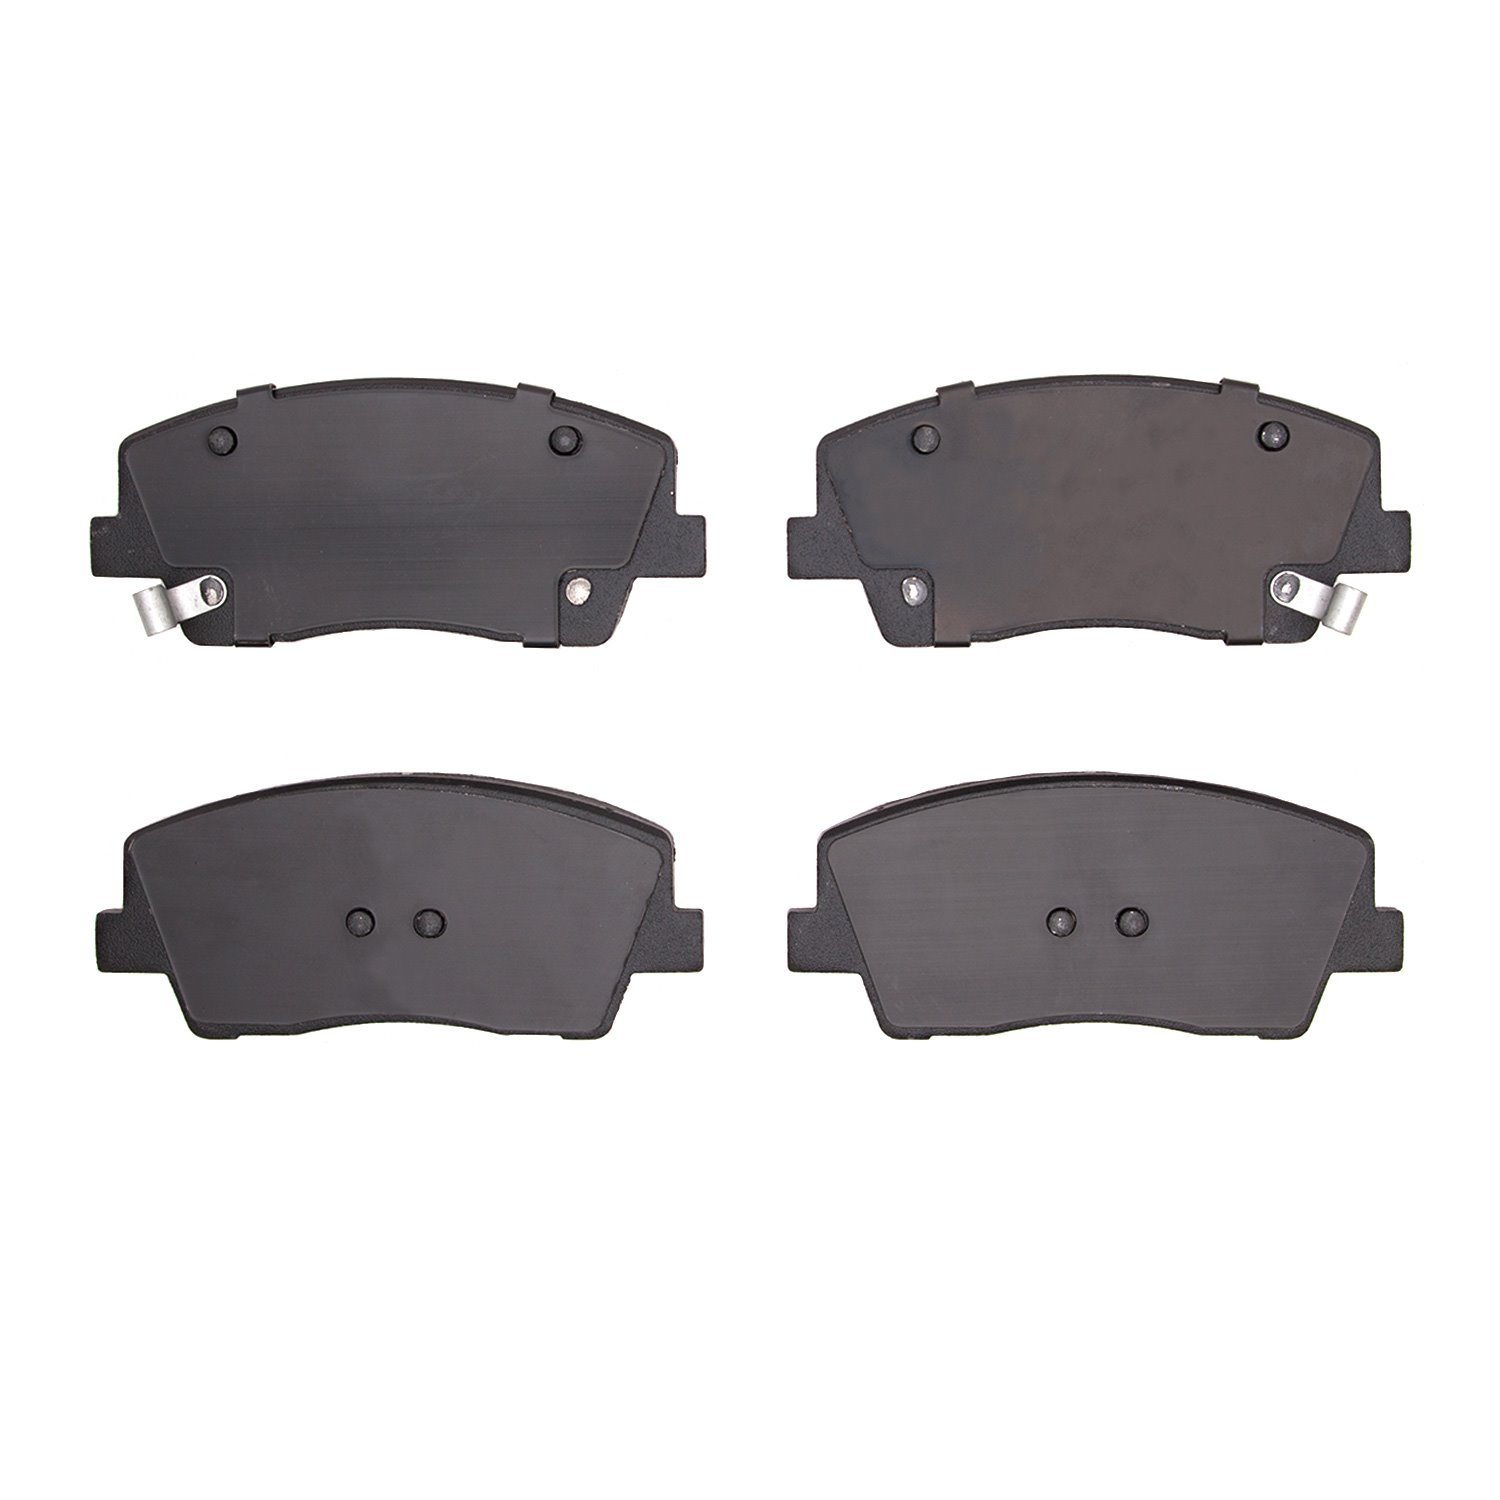 1551-2117-00 5000 Advanced Ceramic Brake Pads, Fits Select Kia/Hyundai/Genesis, Position: Front